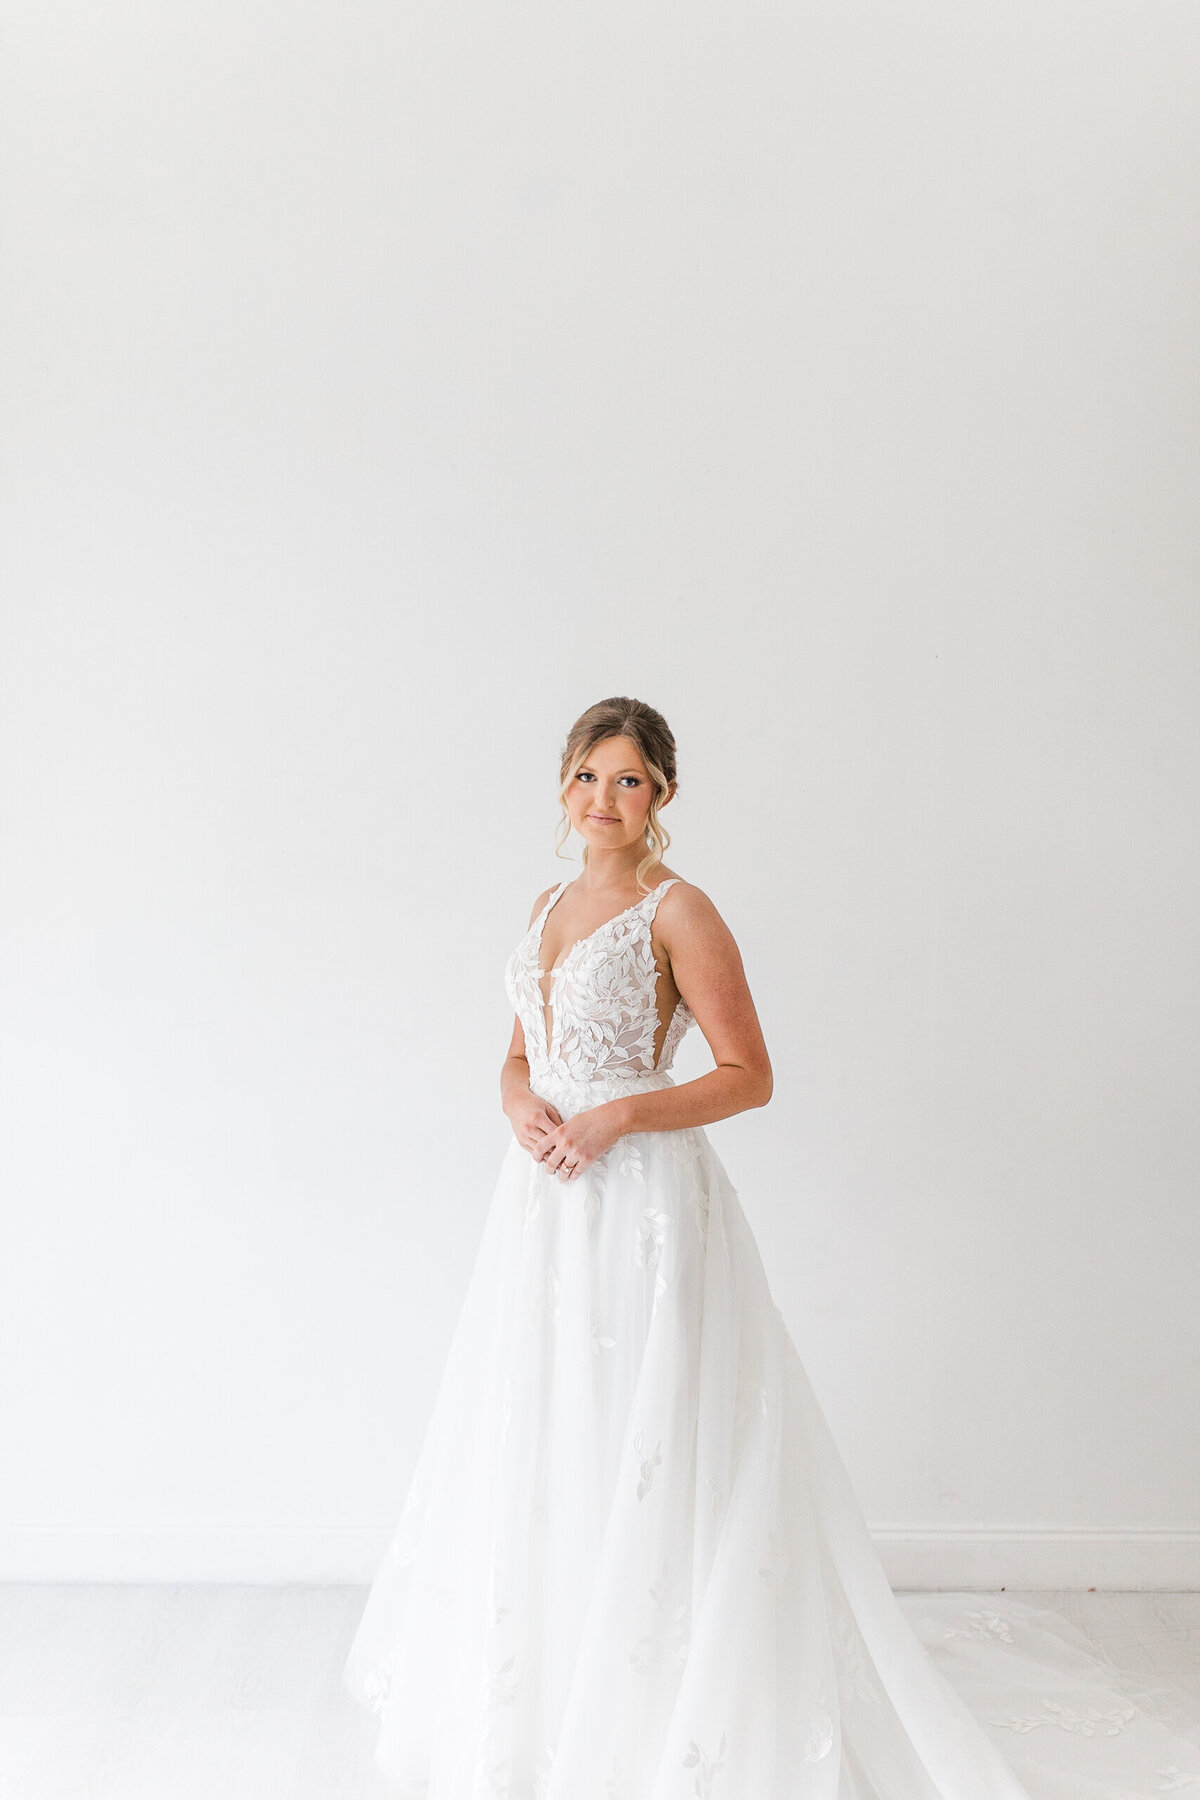 Marissa Reib Photography | Tulsa Wedding Photographer-9-2